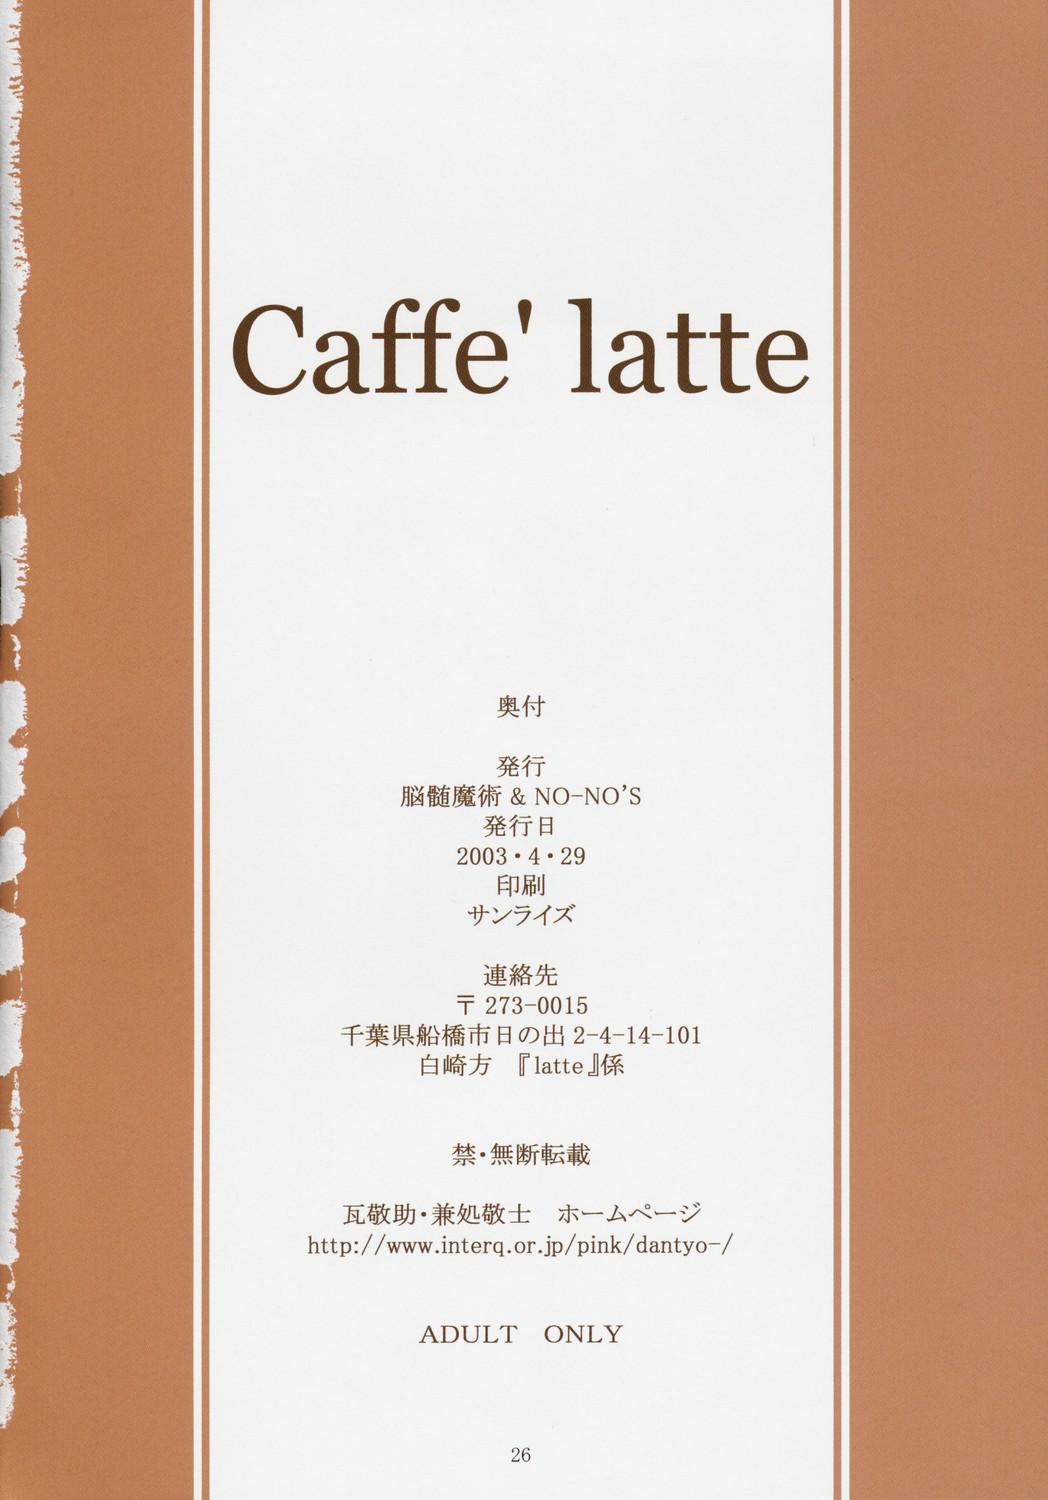 Caffe' latte 26